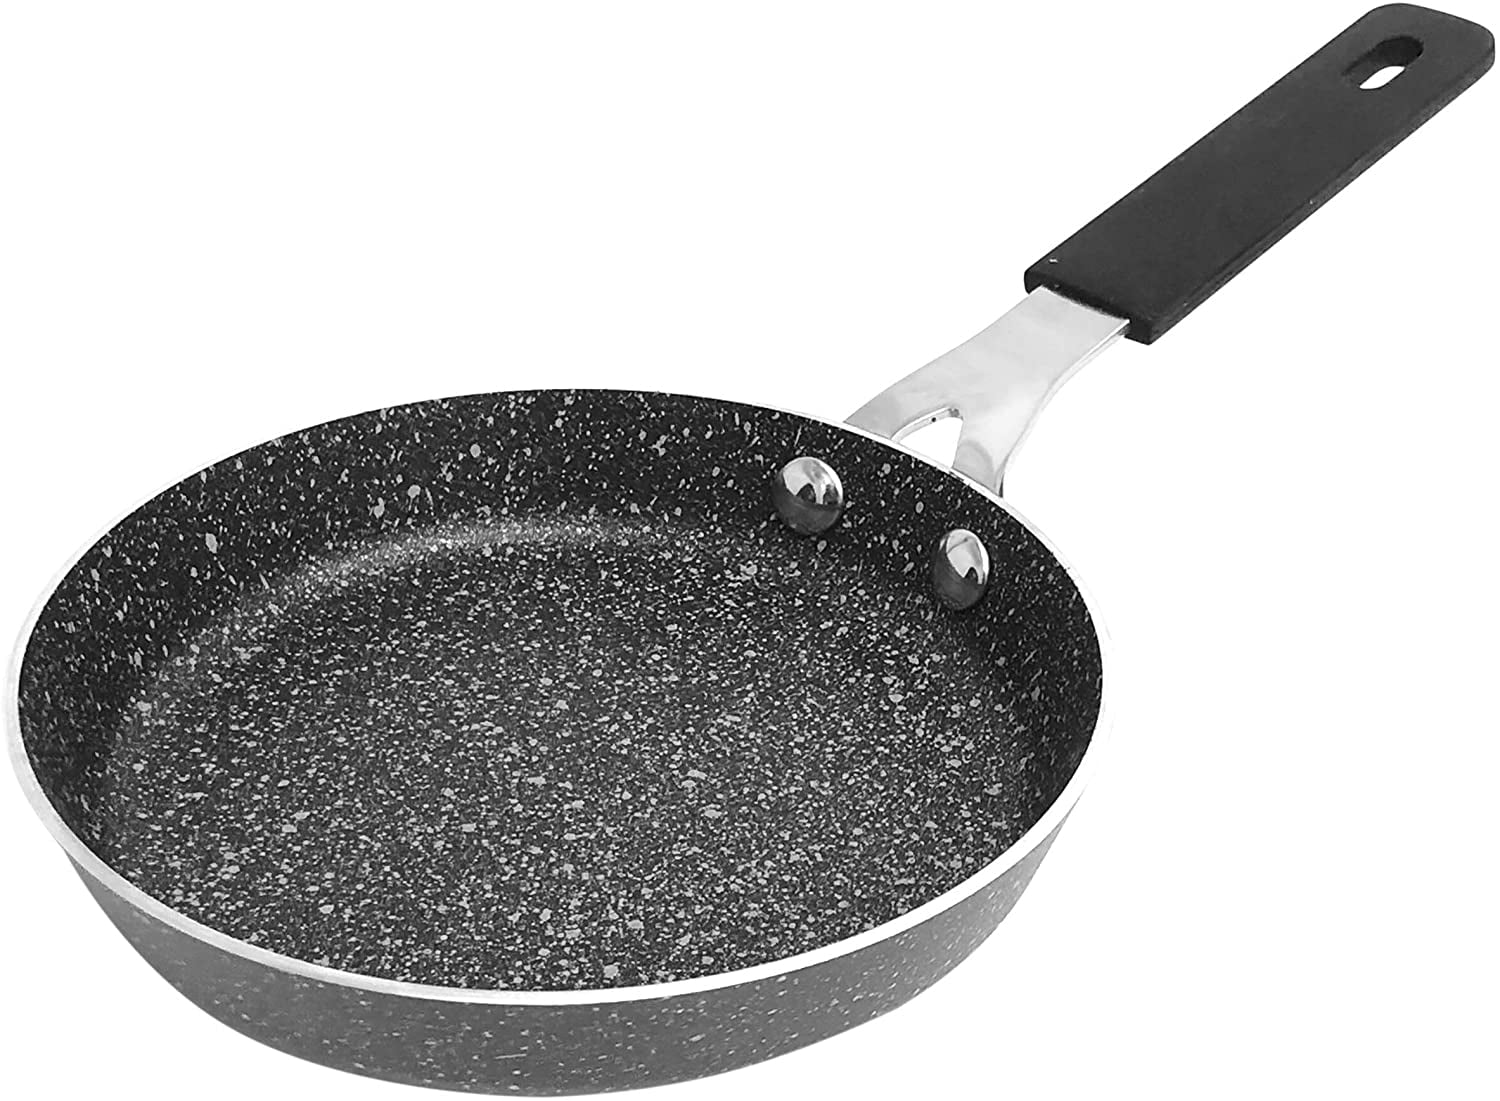 Granitestone Non-Stick Egg Pan - 5.5 Inches Black